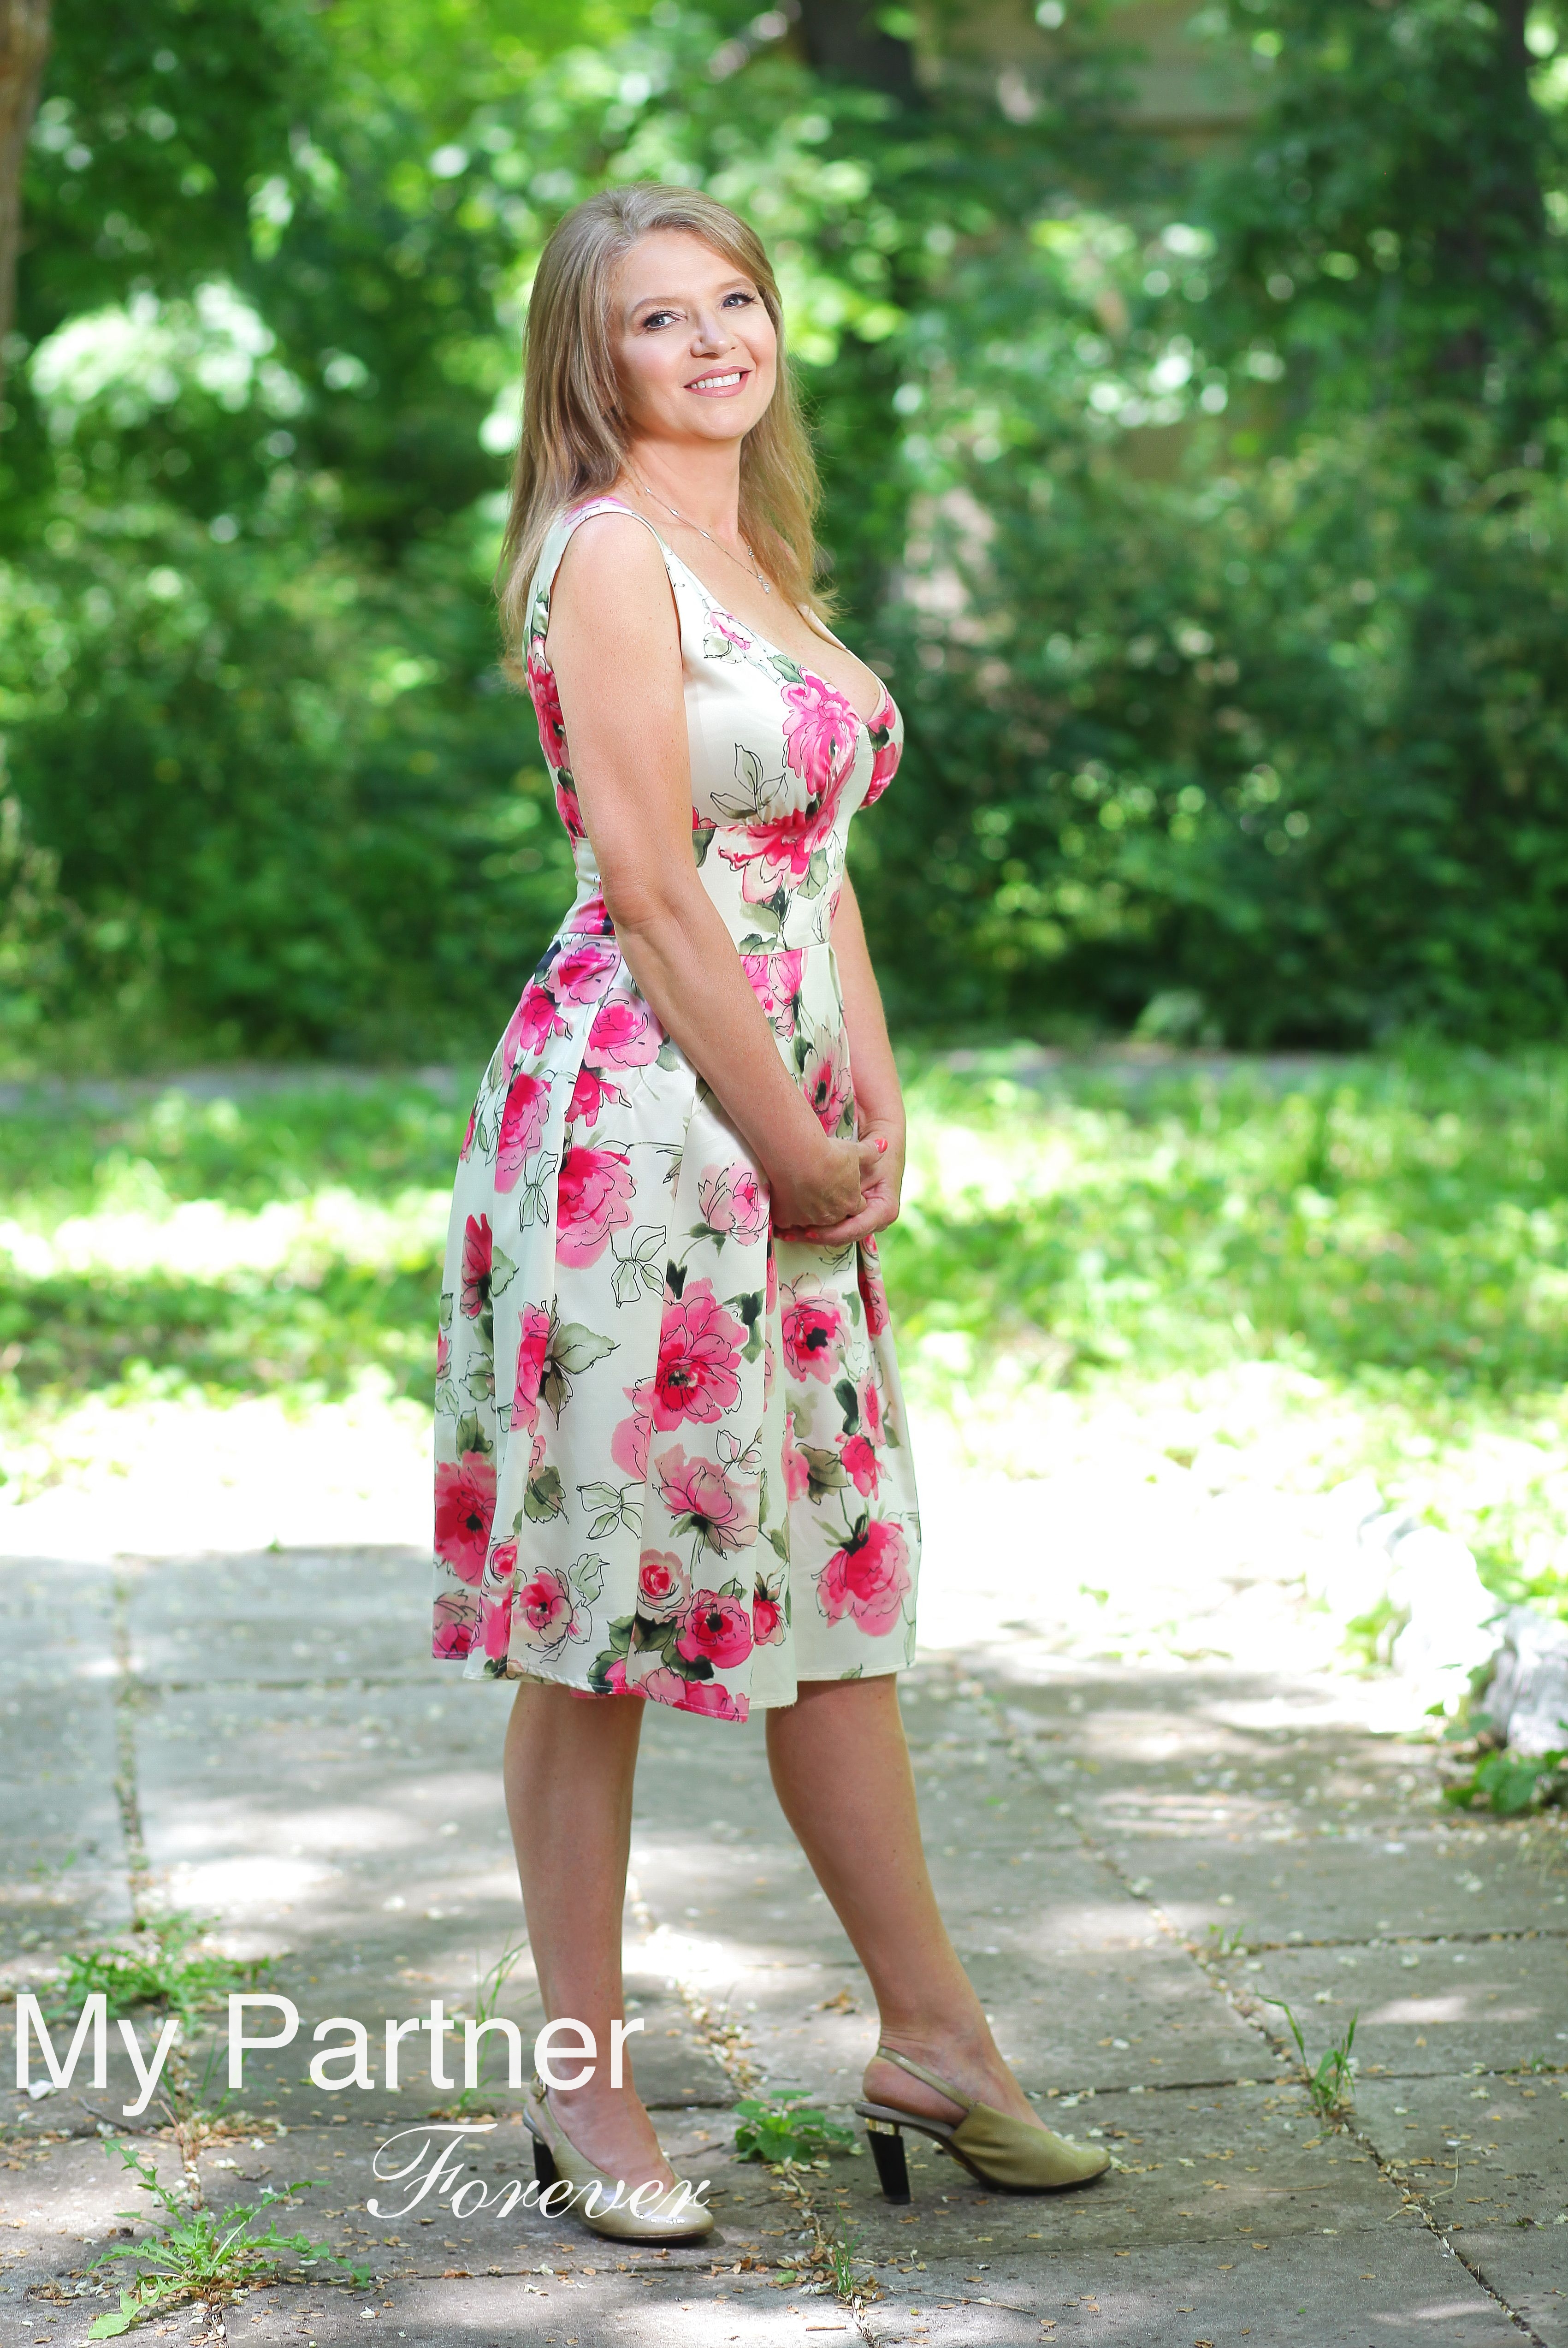 Dating Site to Meet Stunning Ukrainian Girl Irina from Odessa, Ukraine